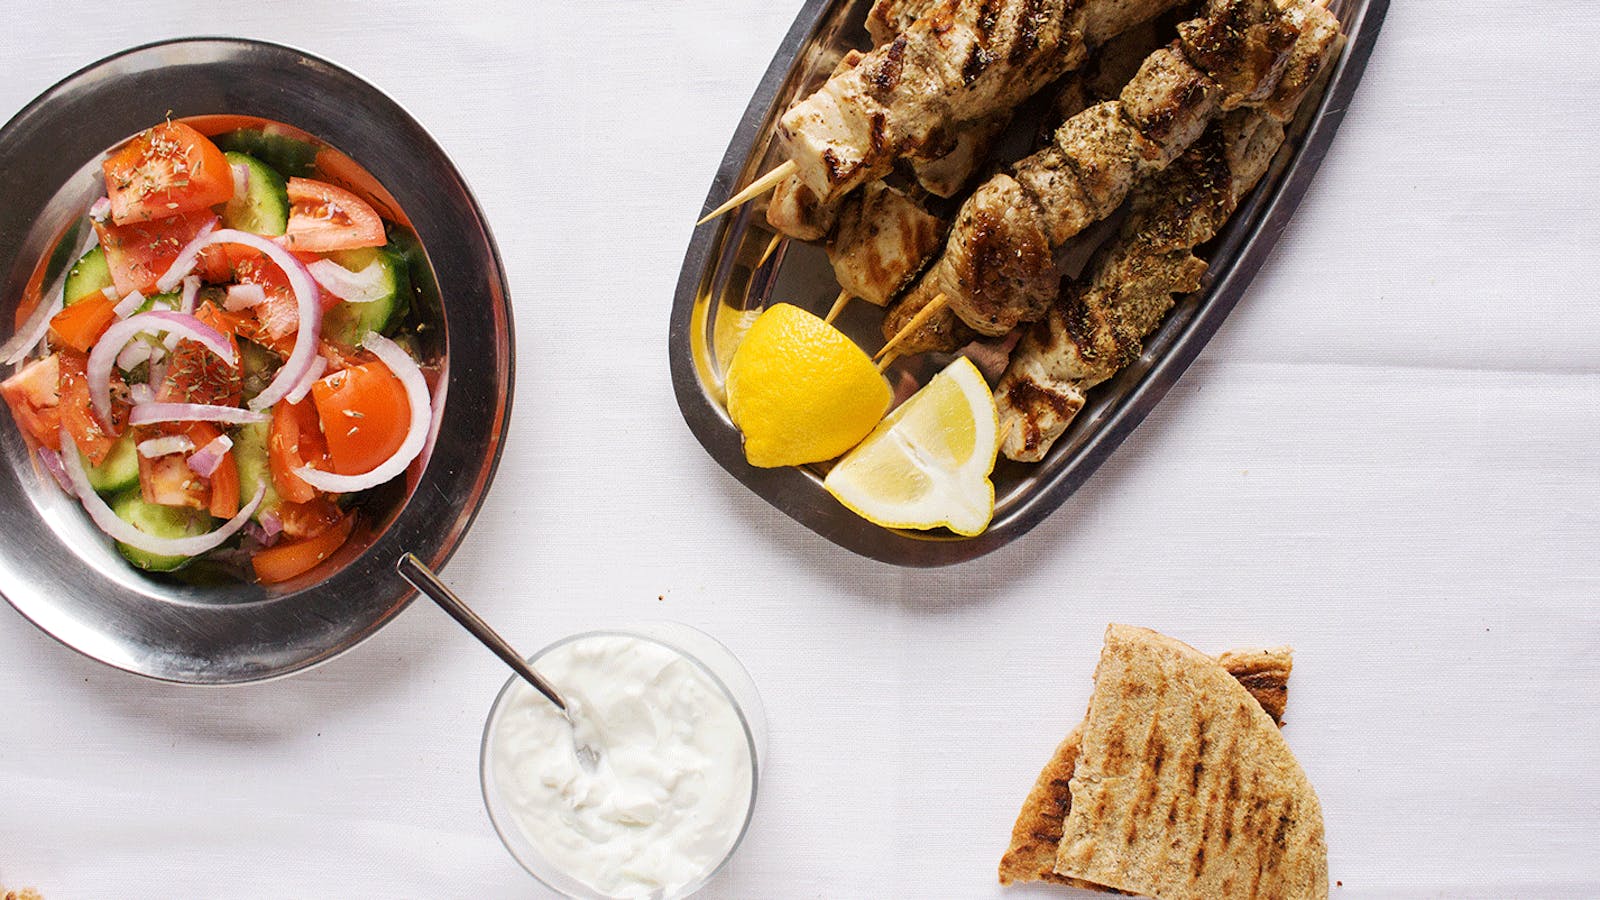 Souvlaki, the Greek traditional recipe